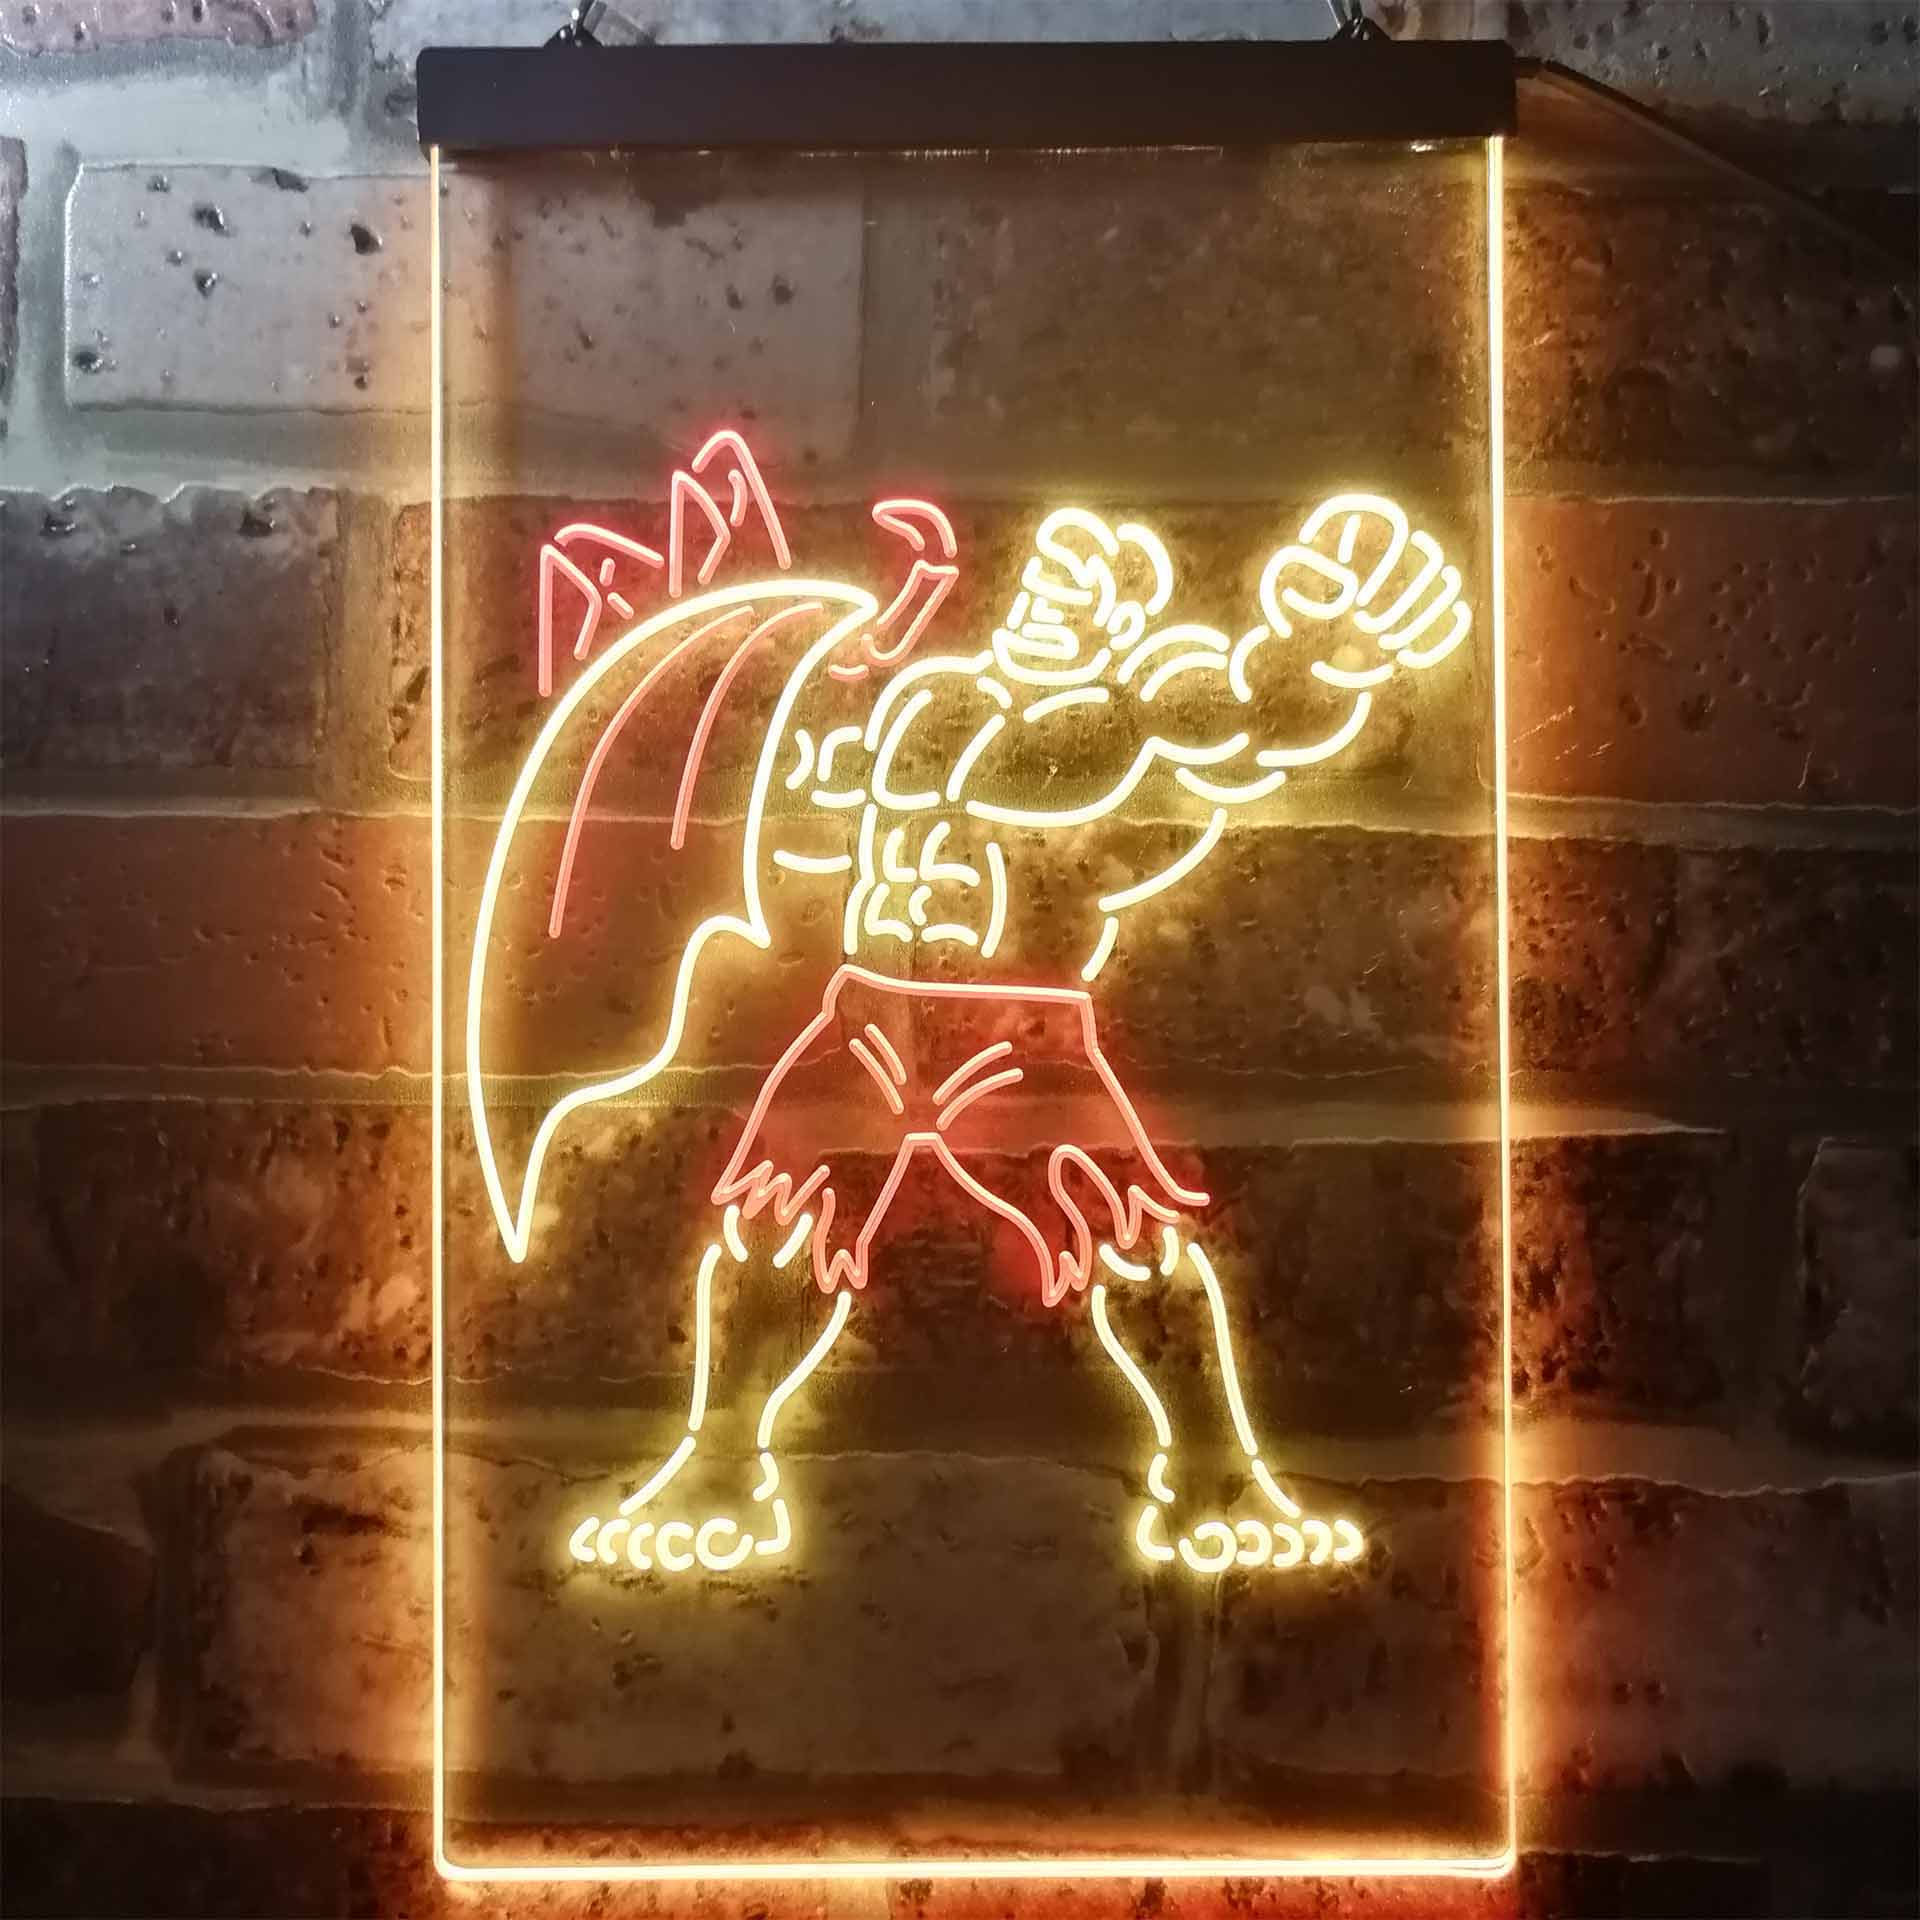 The Incredible Hulk LED Neon Sign